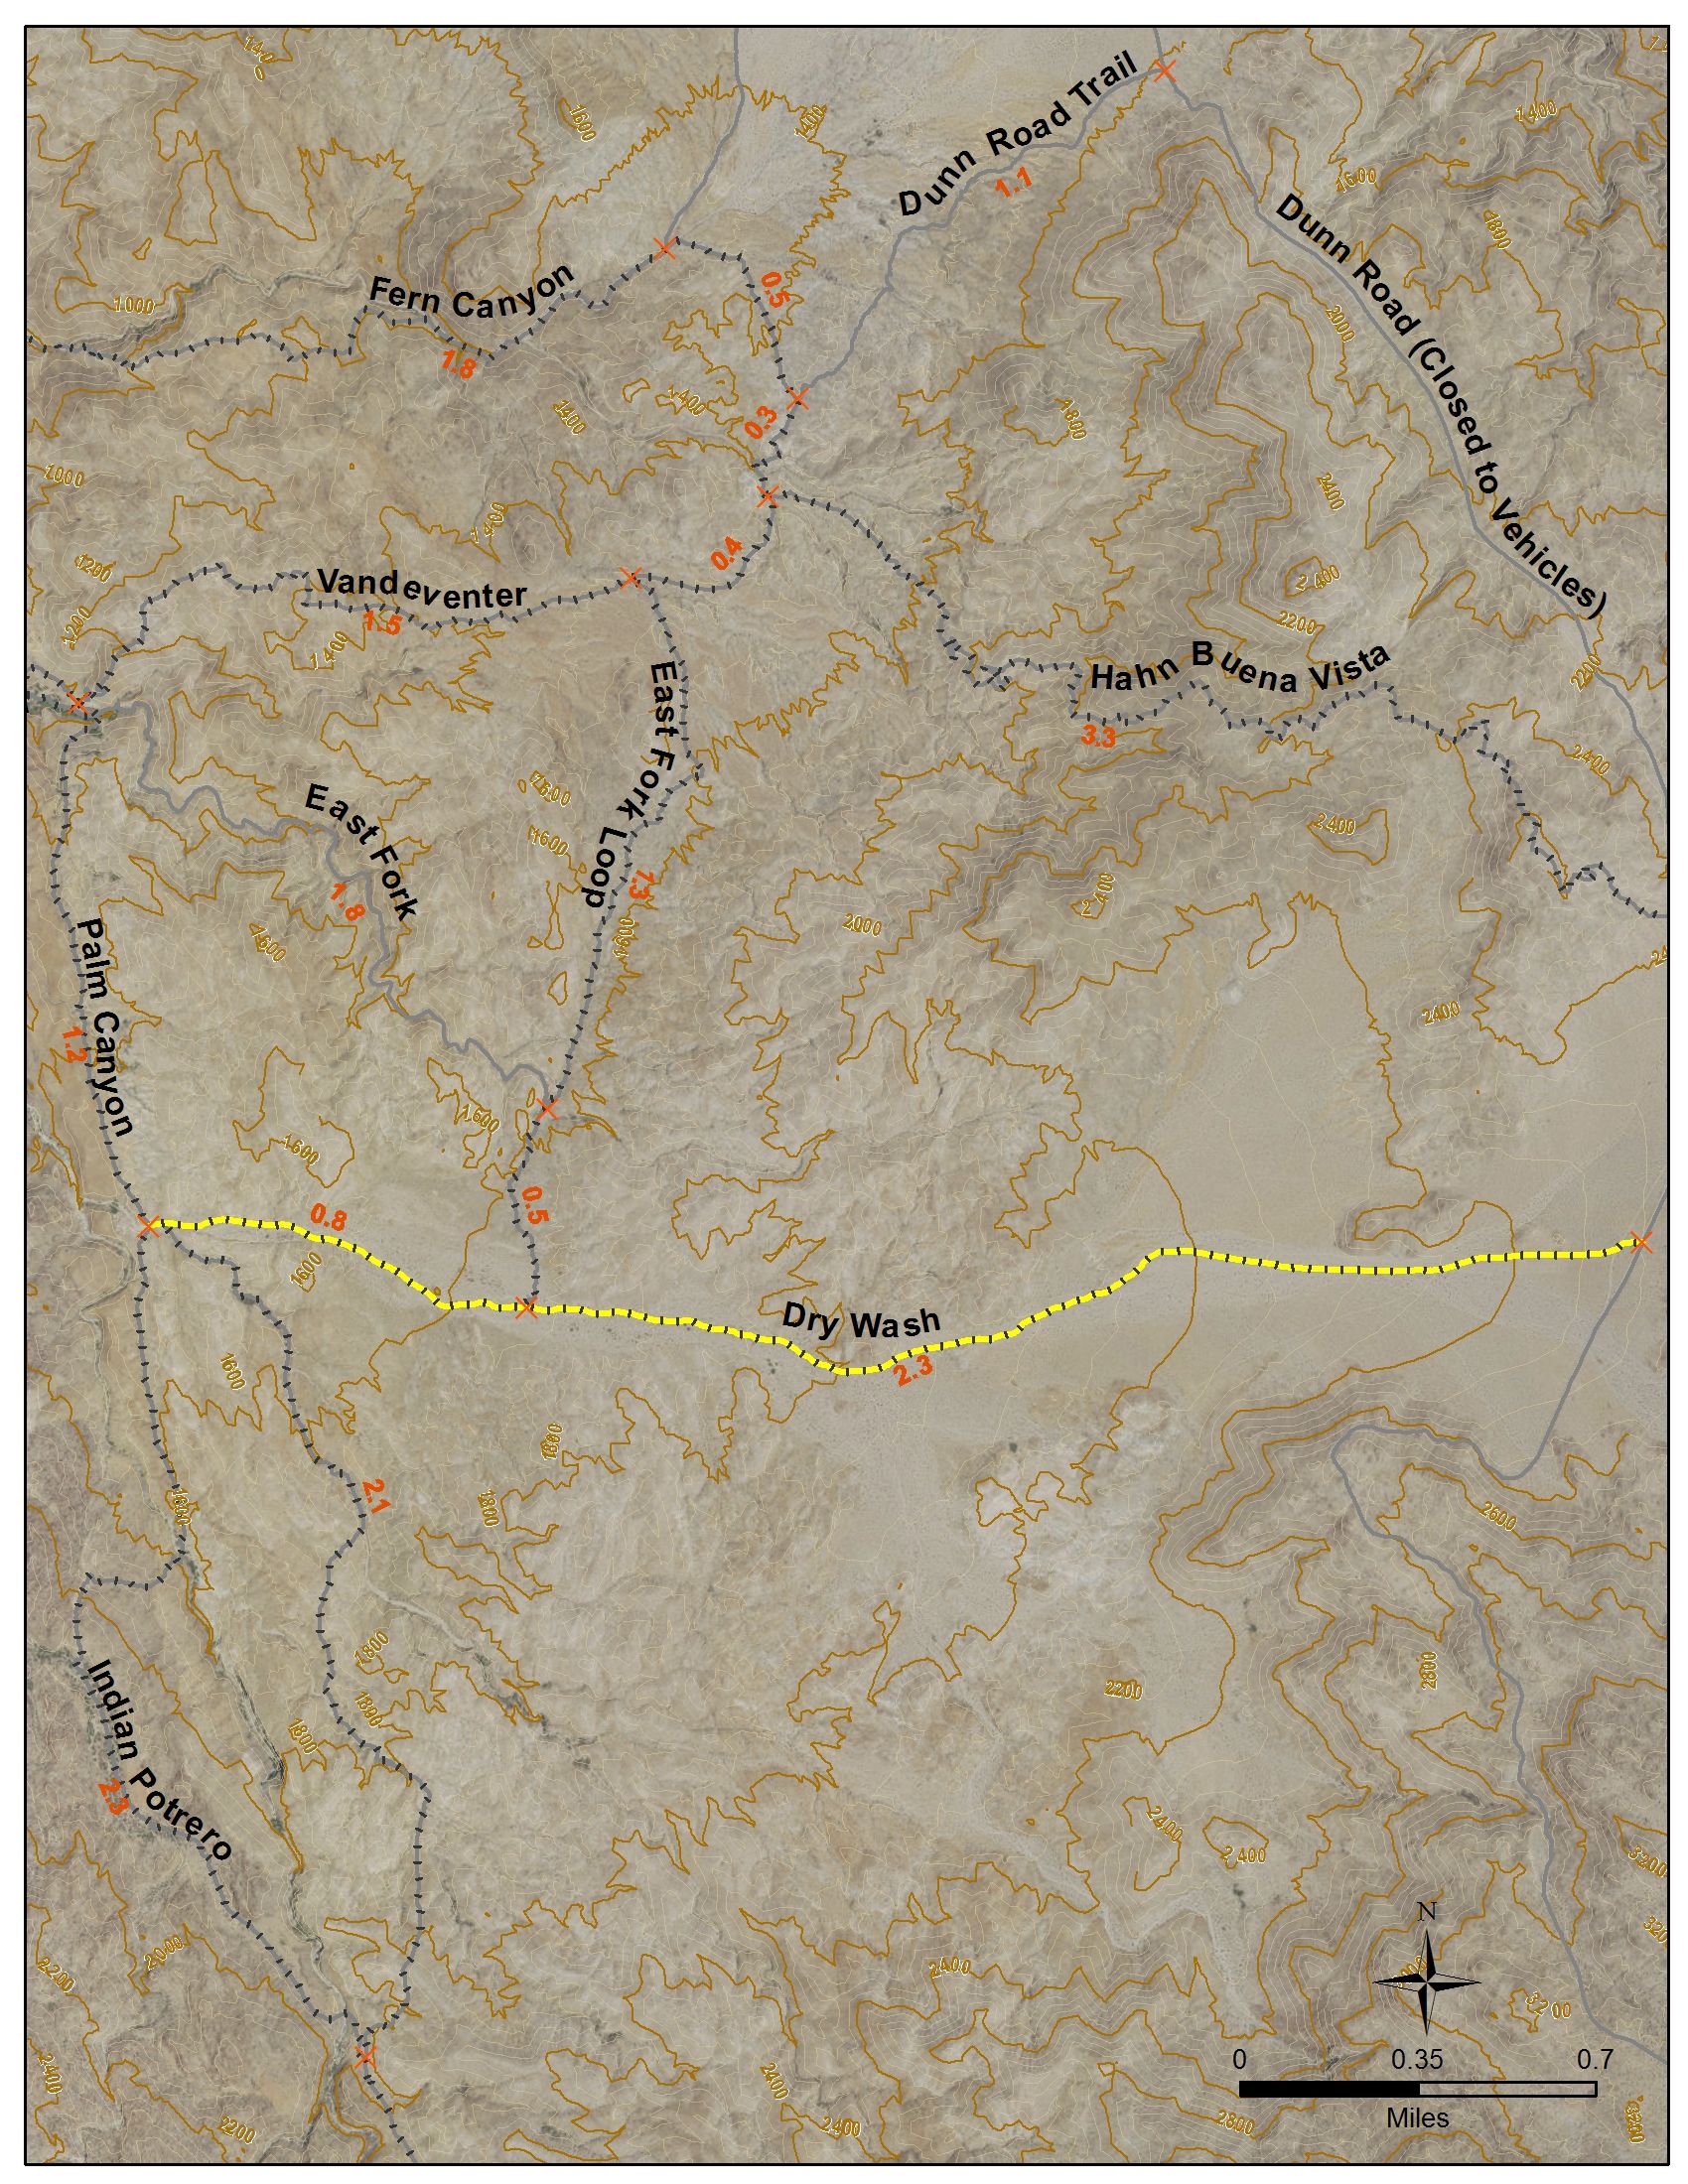 Dry Wash Trail Palm Canyon map